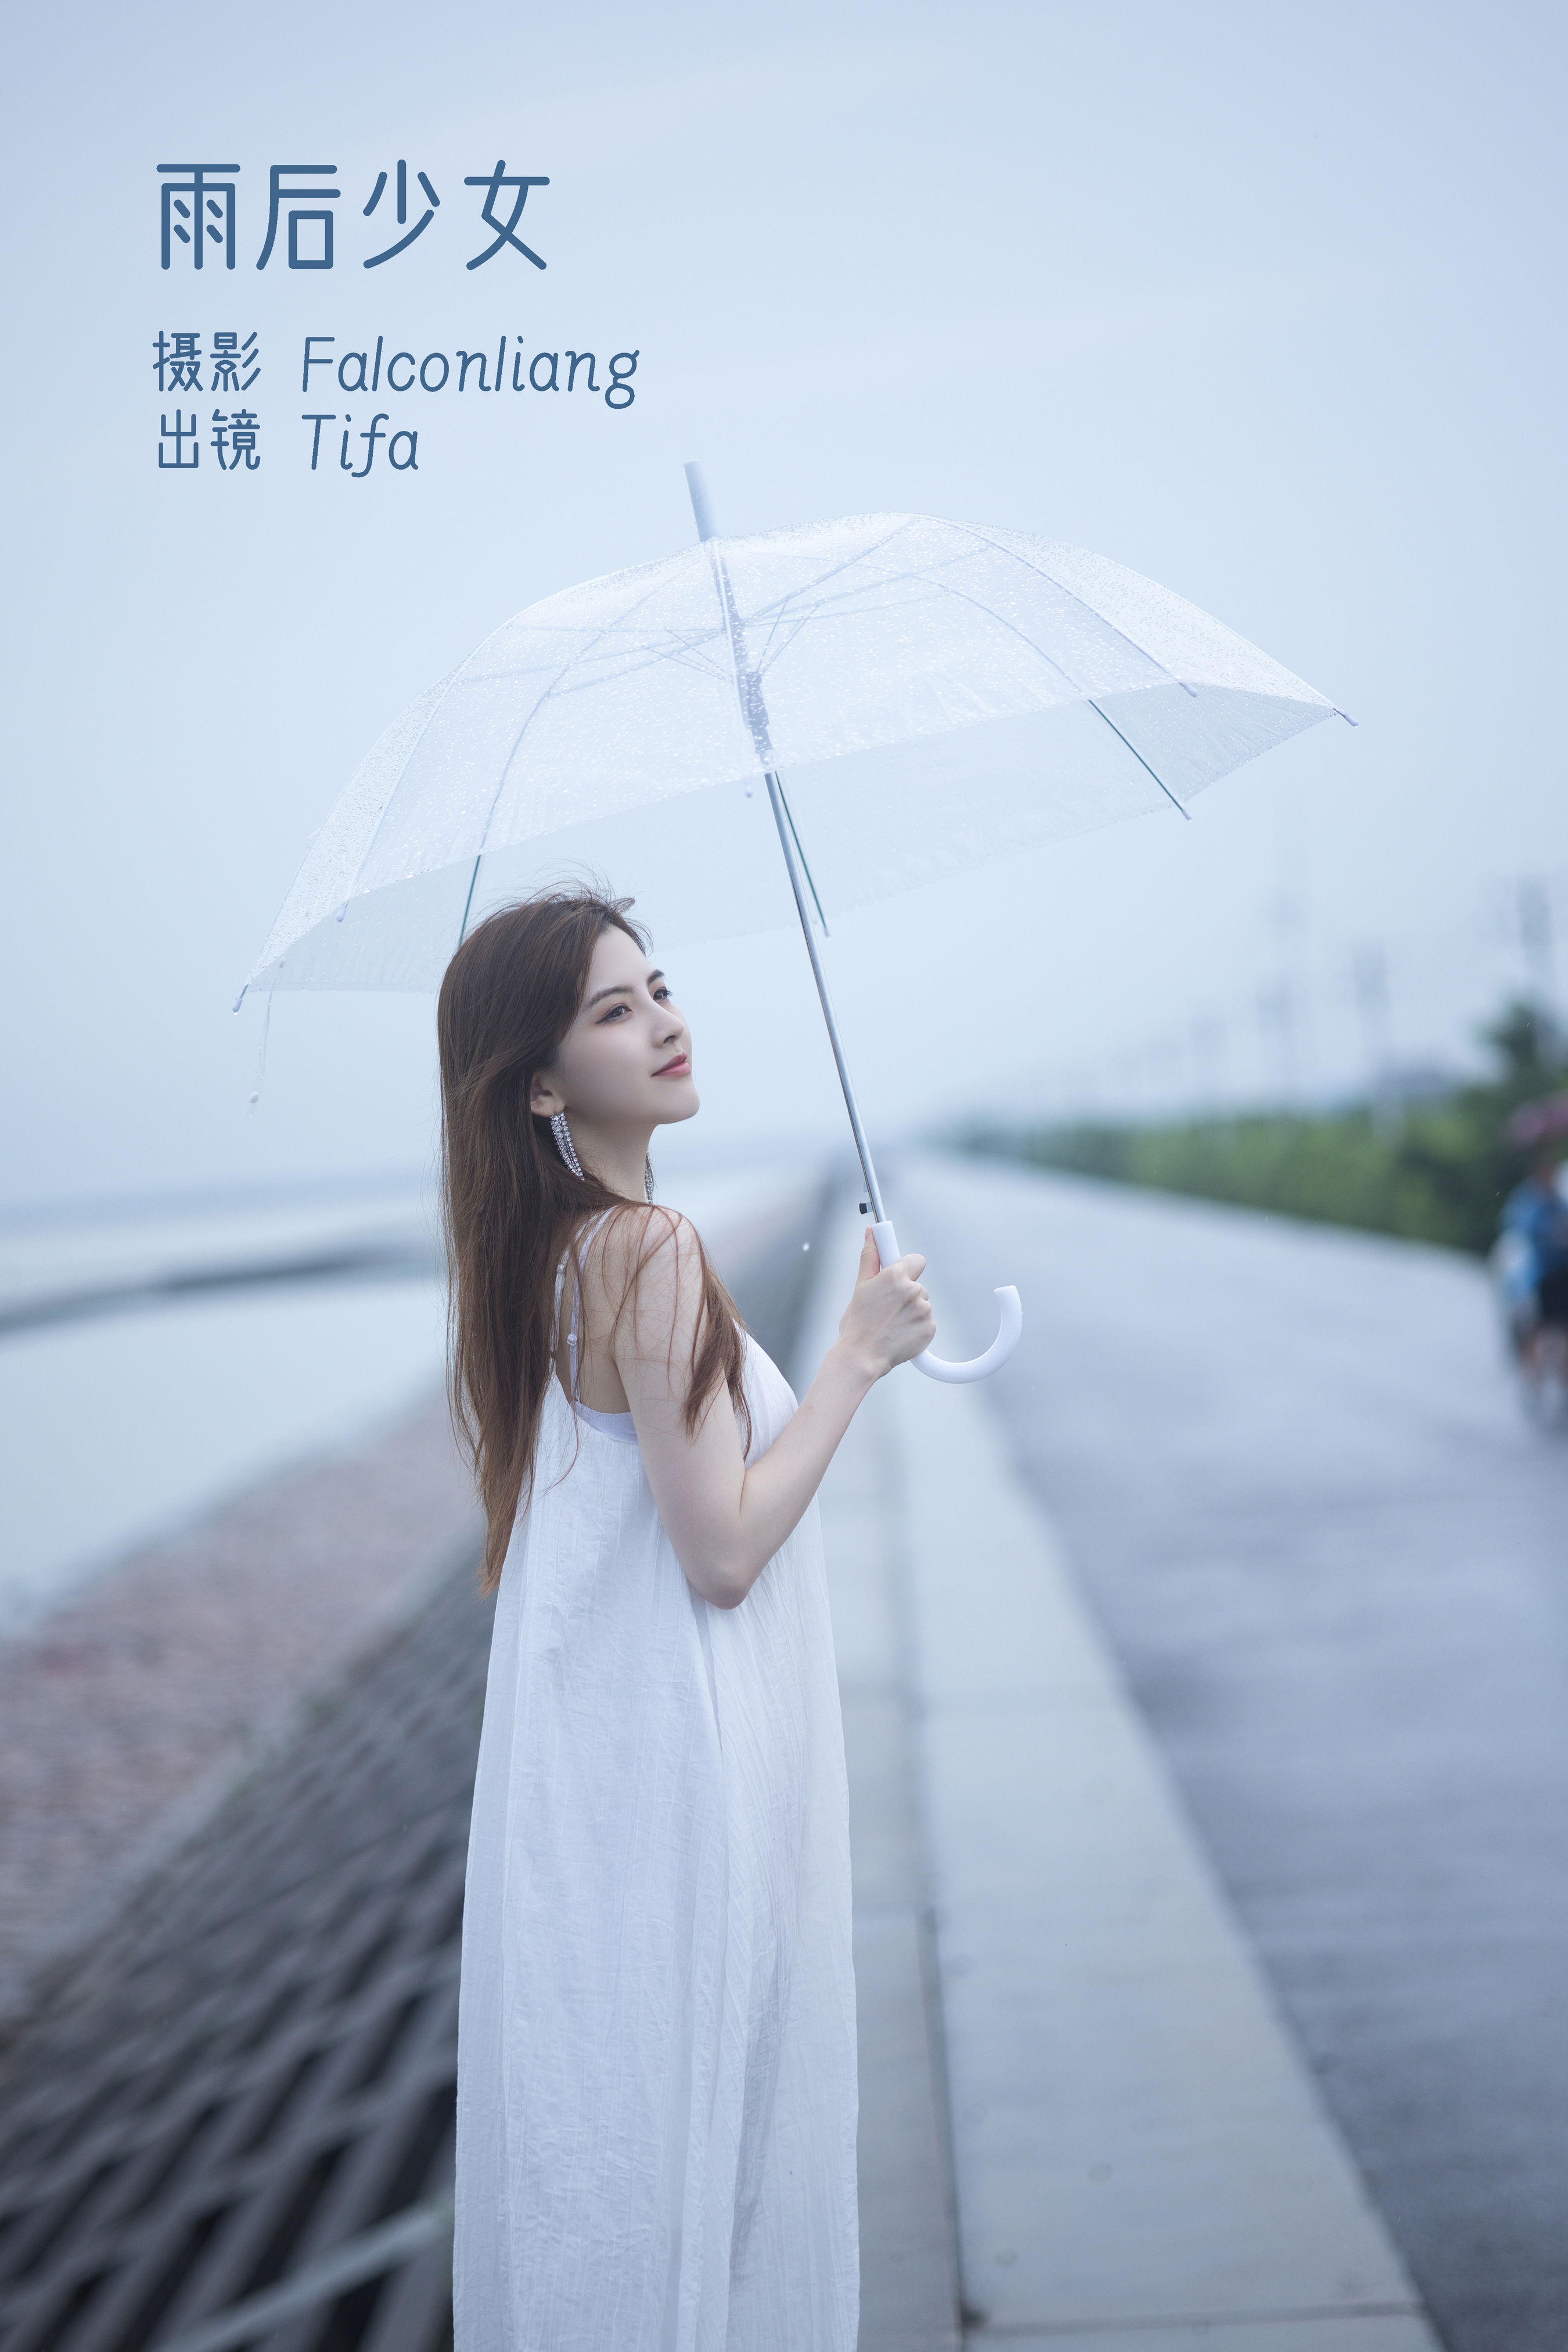 Falconliang_Tifa丁小妮《雨后少女》美图作品图片1